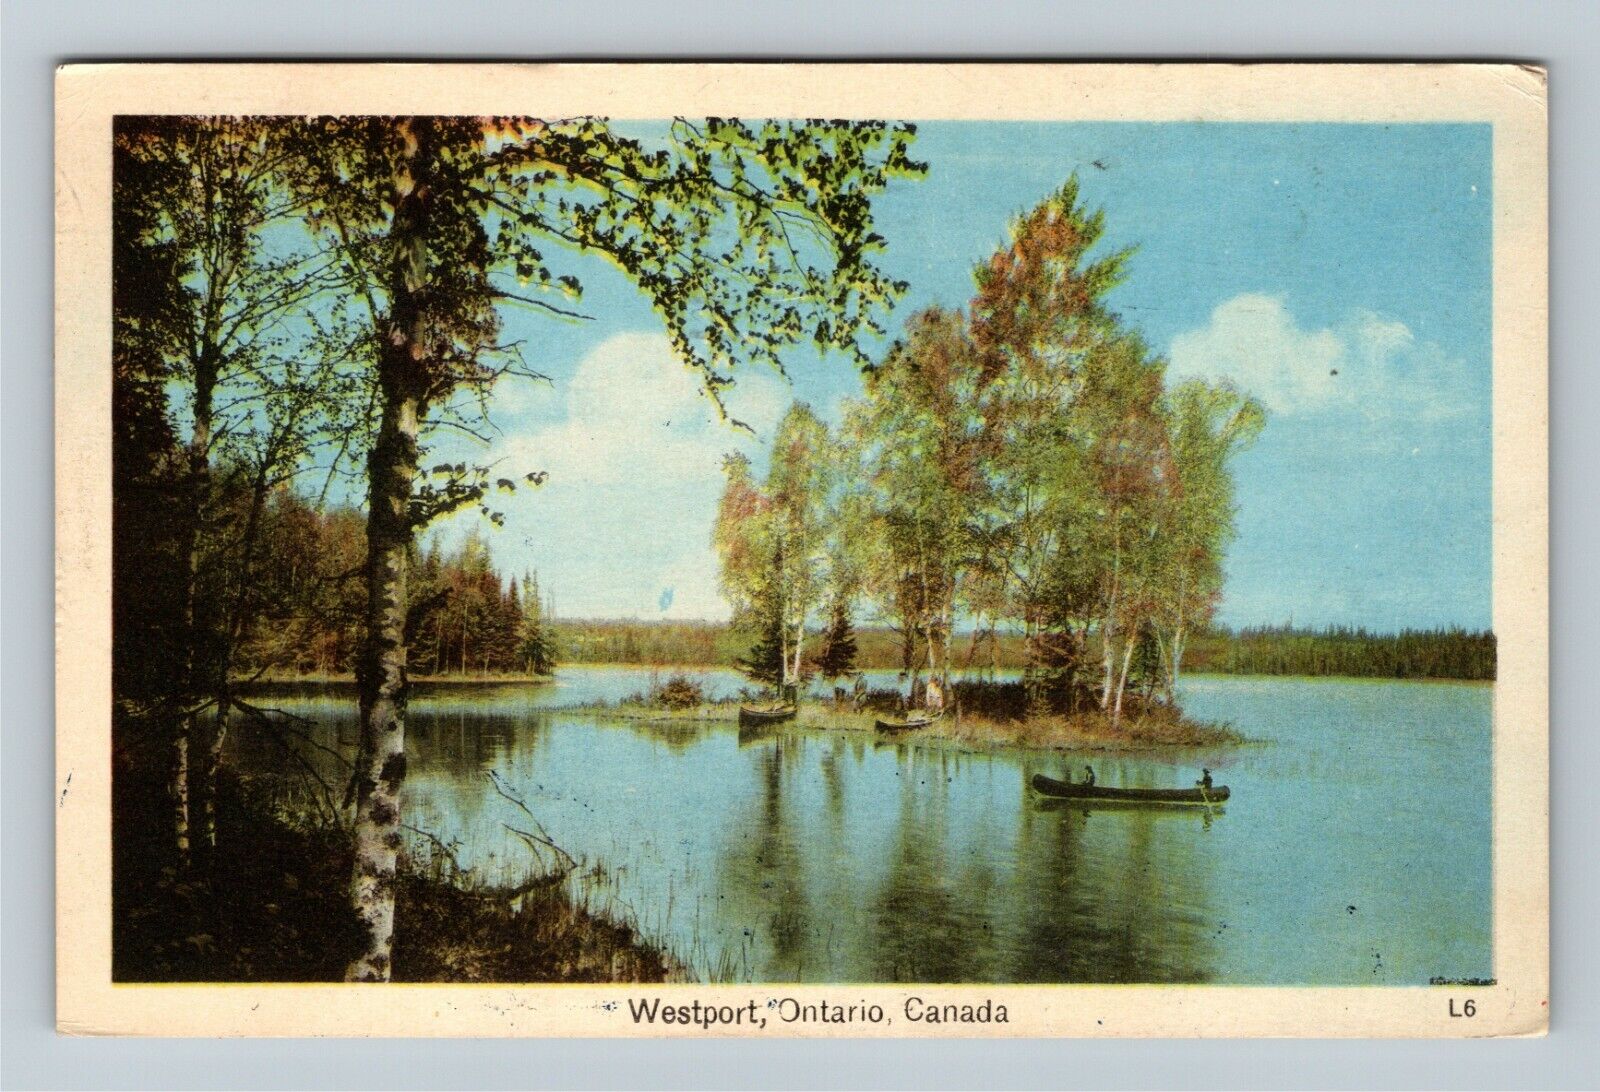 Westport, Ontario-Canada, Scenic Water View, Canoe, c1954 Vintage Postcard